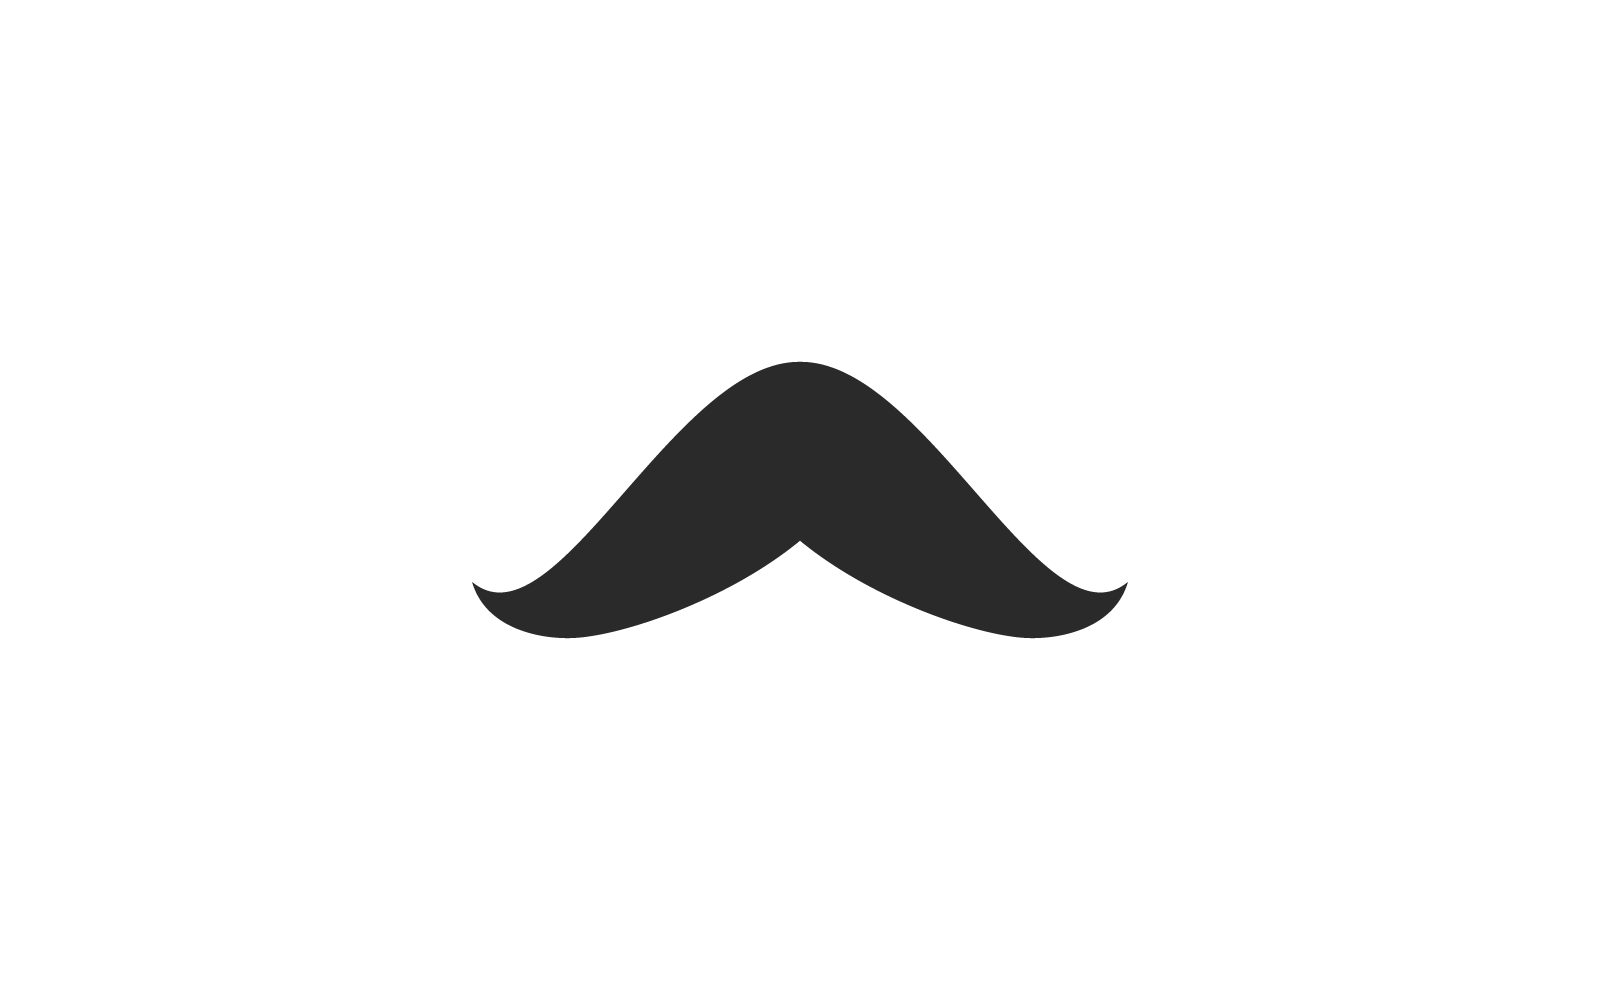 Mustache ilustration flat design template